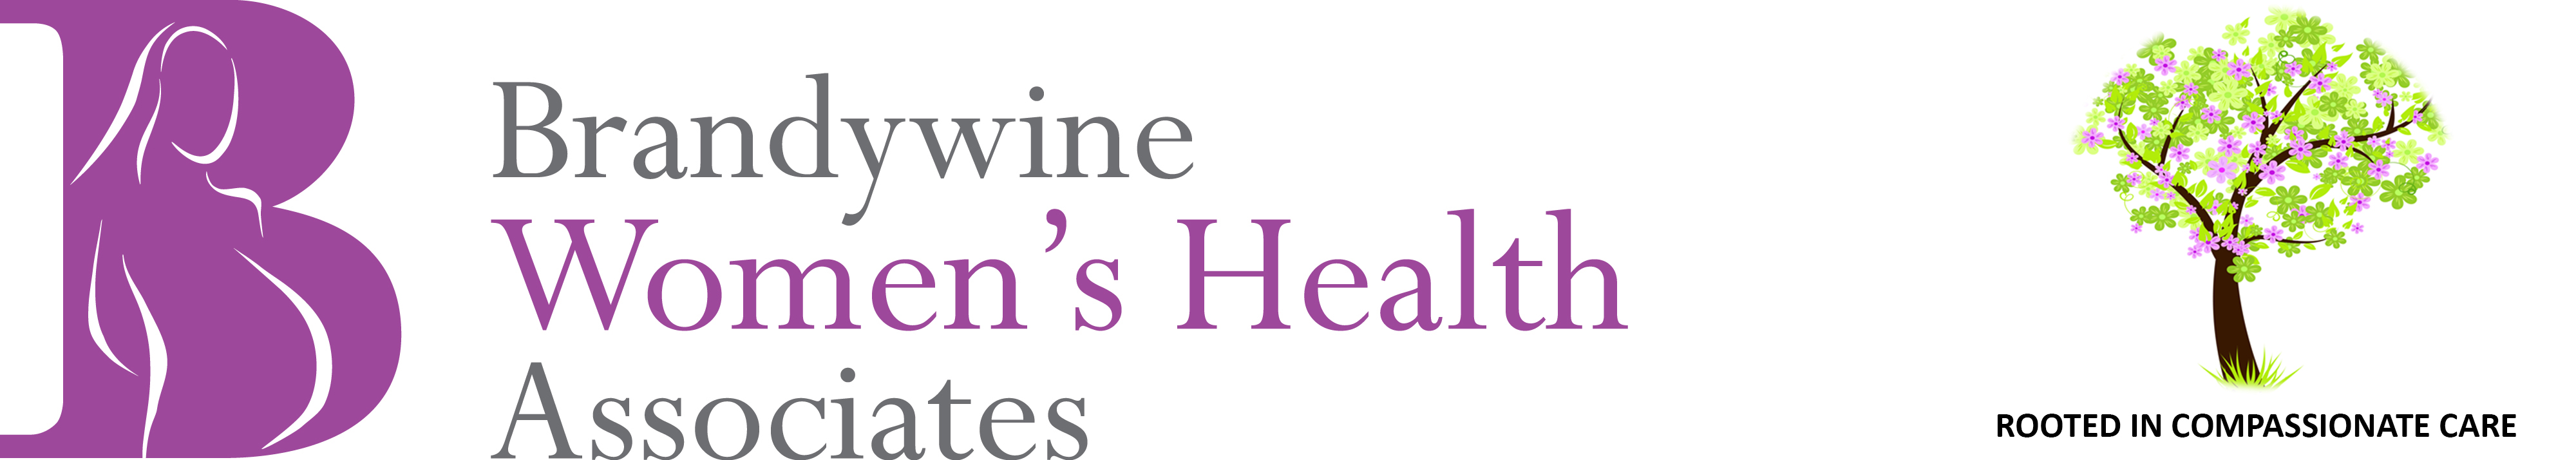 Brandywine Women's Health Associates